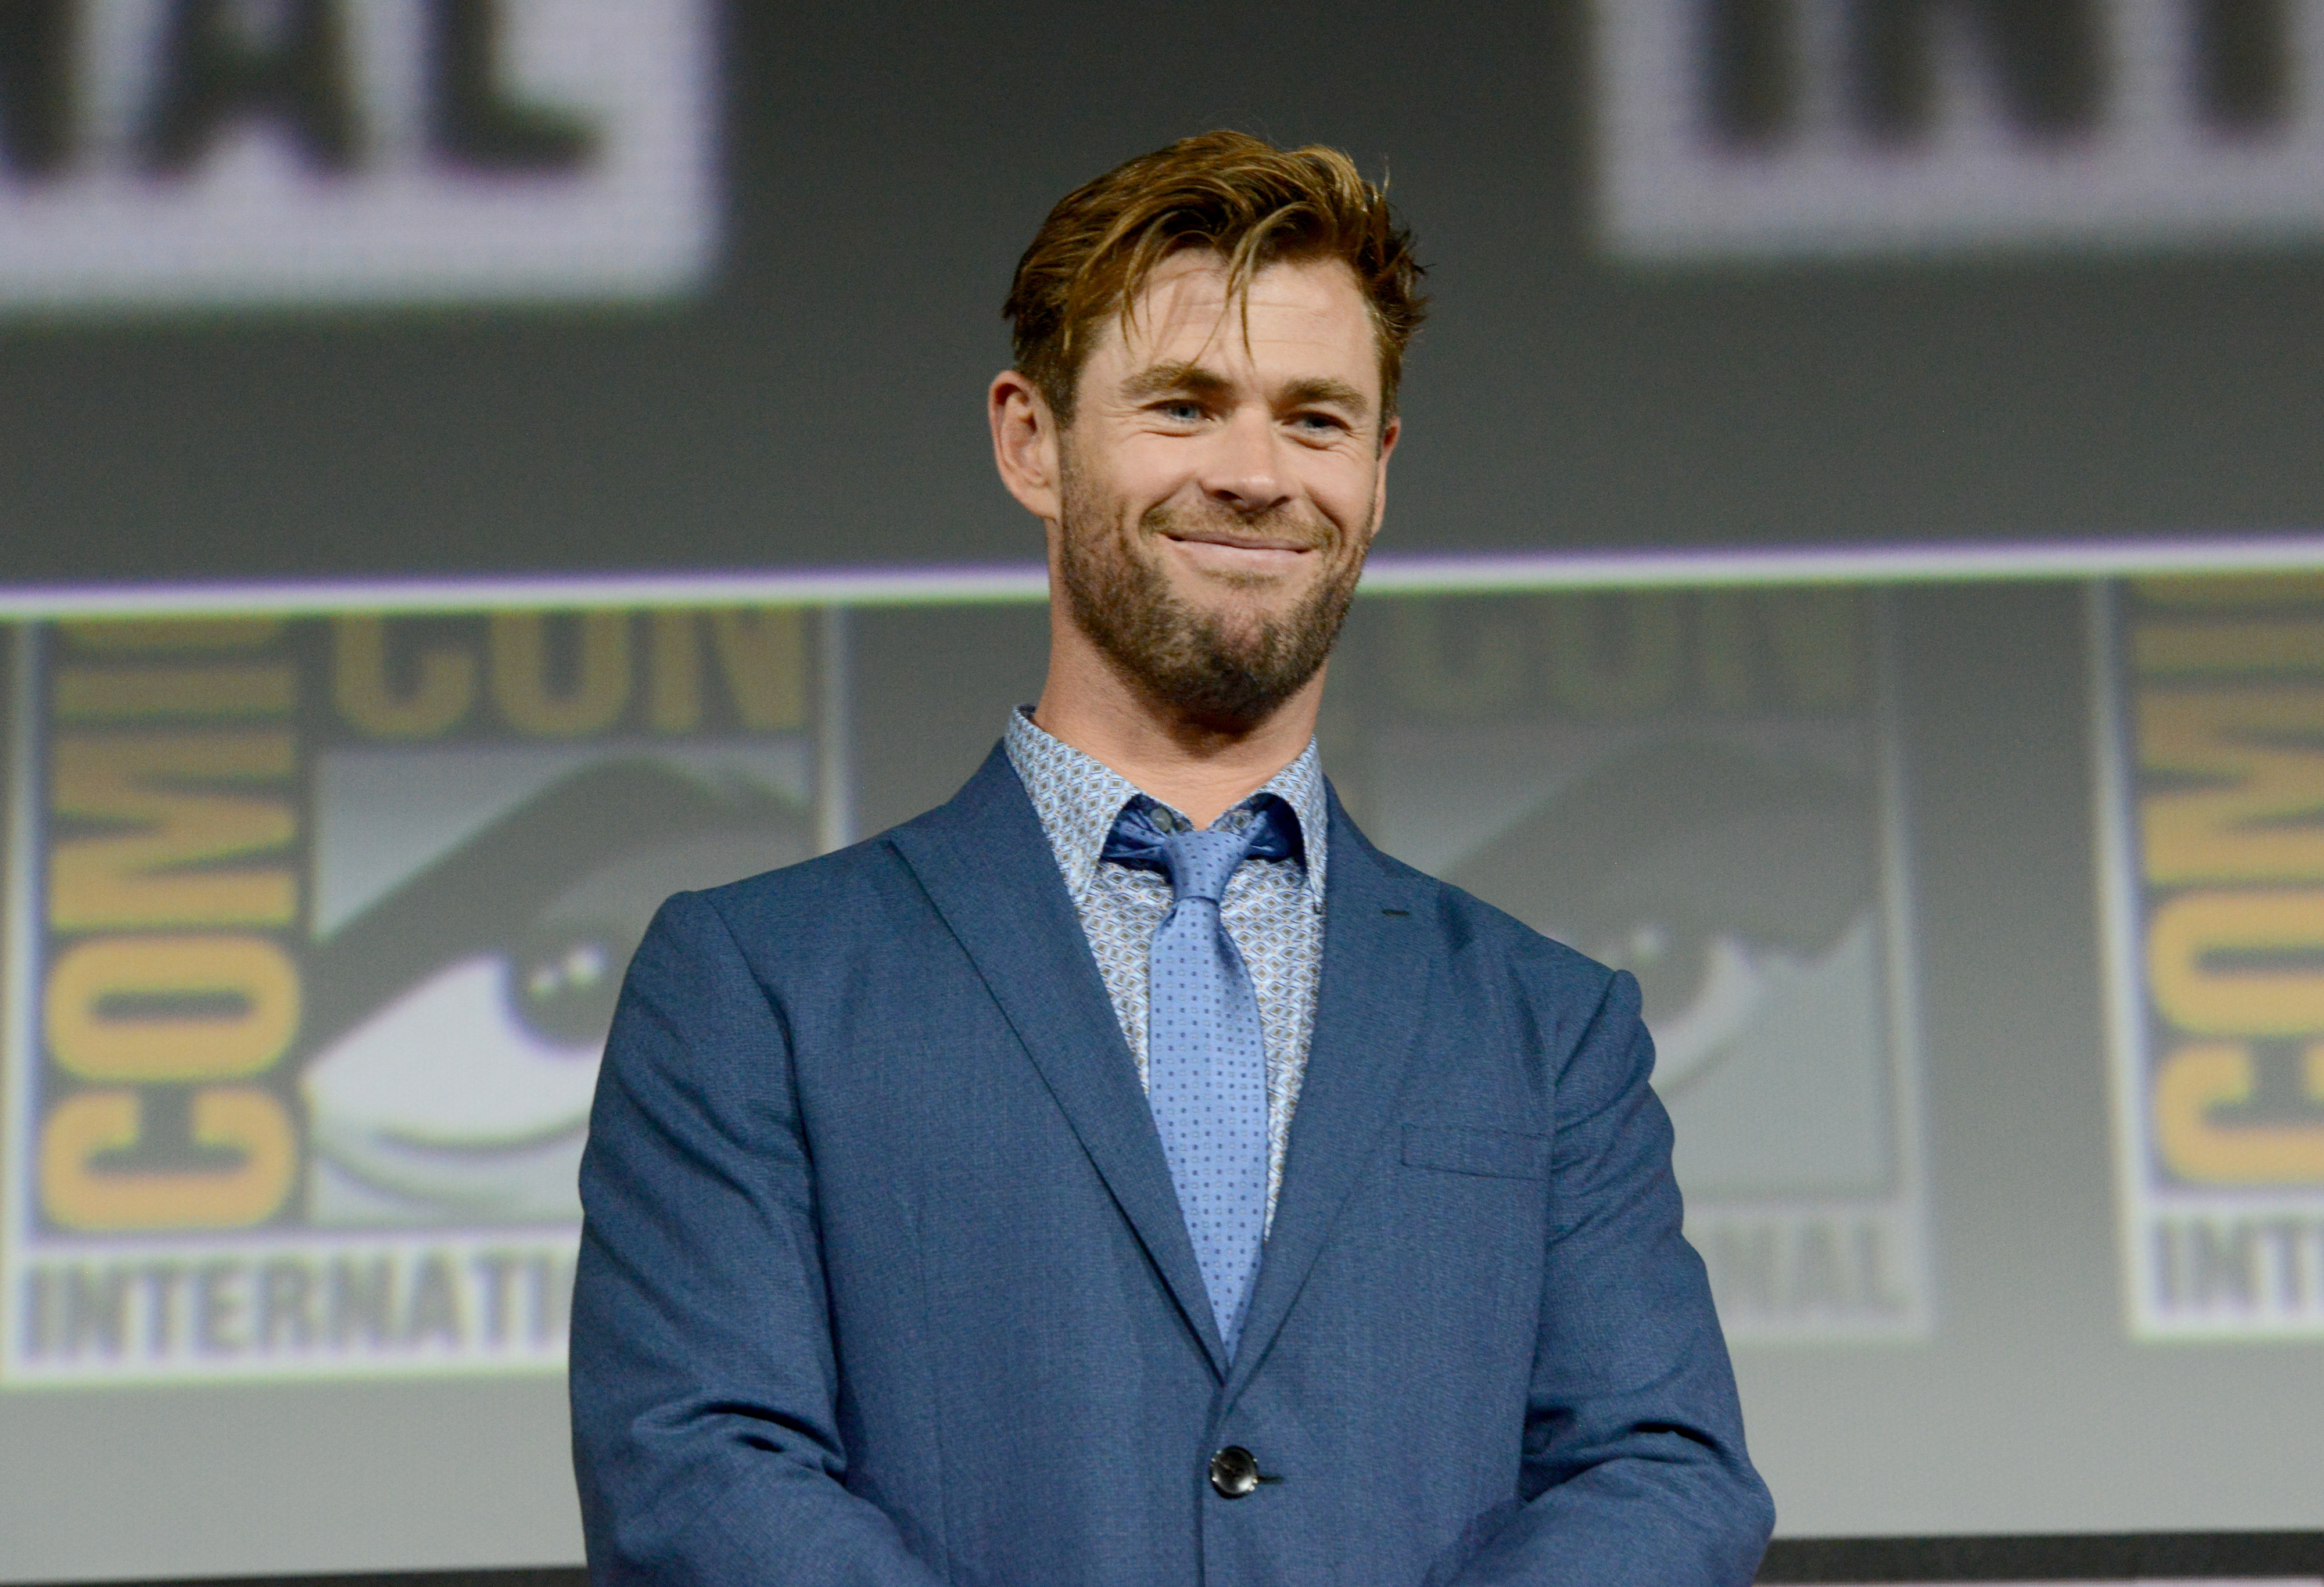 'What If...?' star Chris Hemsworth wears a dark blue suit over a light blue button down shirt and light blue tie.